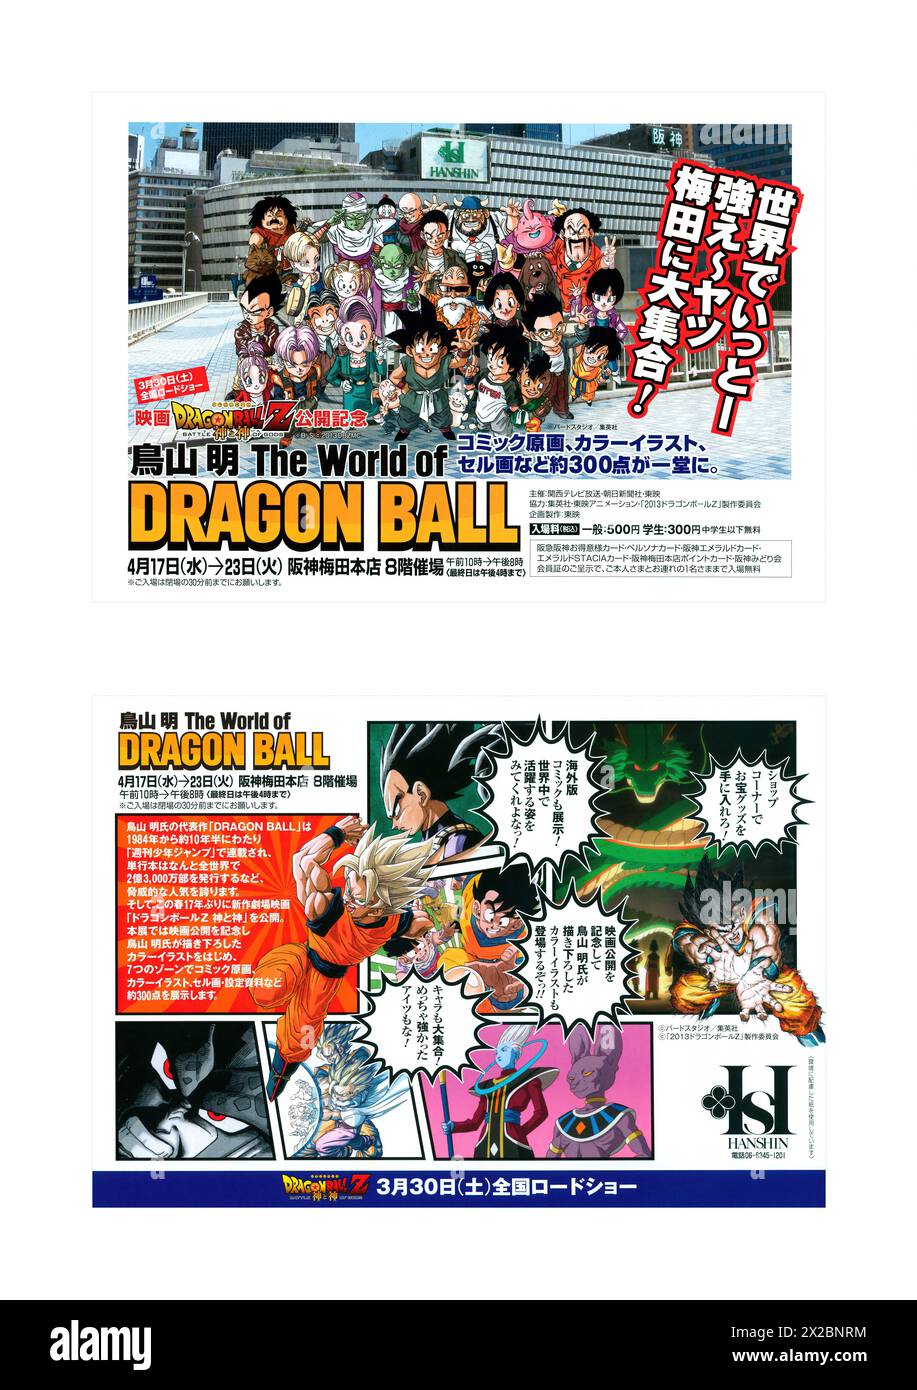 osaka, japan - apr 17 2013: Double-sided leaflet of the 'Akira Toriyama The World of DRAGONBALL' exhibition commemorating the premiere of the anime mo Stock Photo